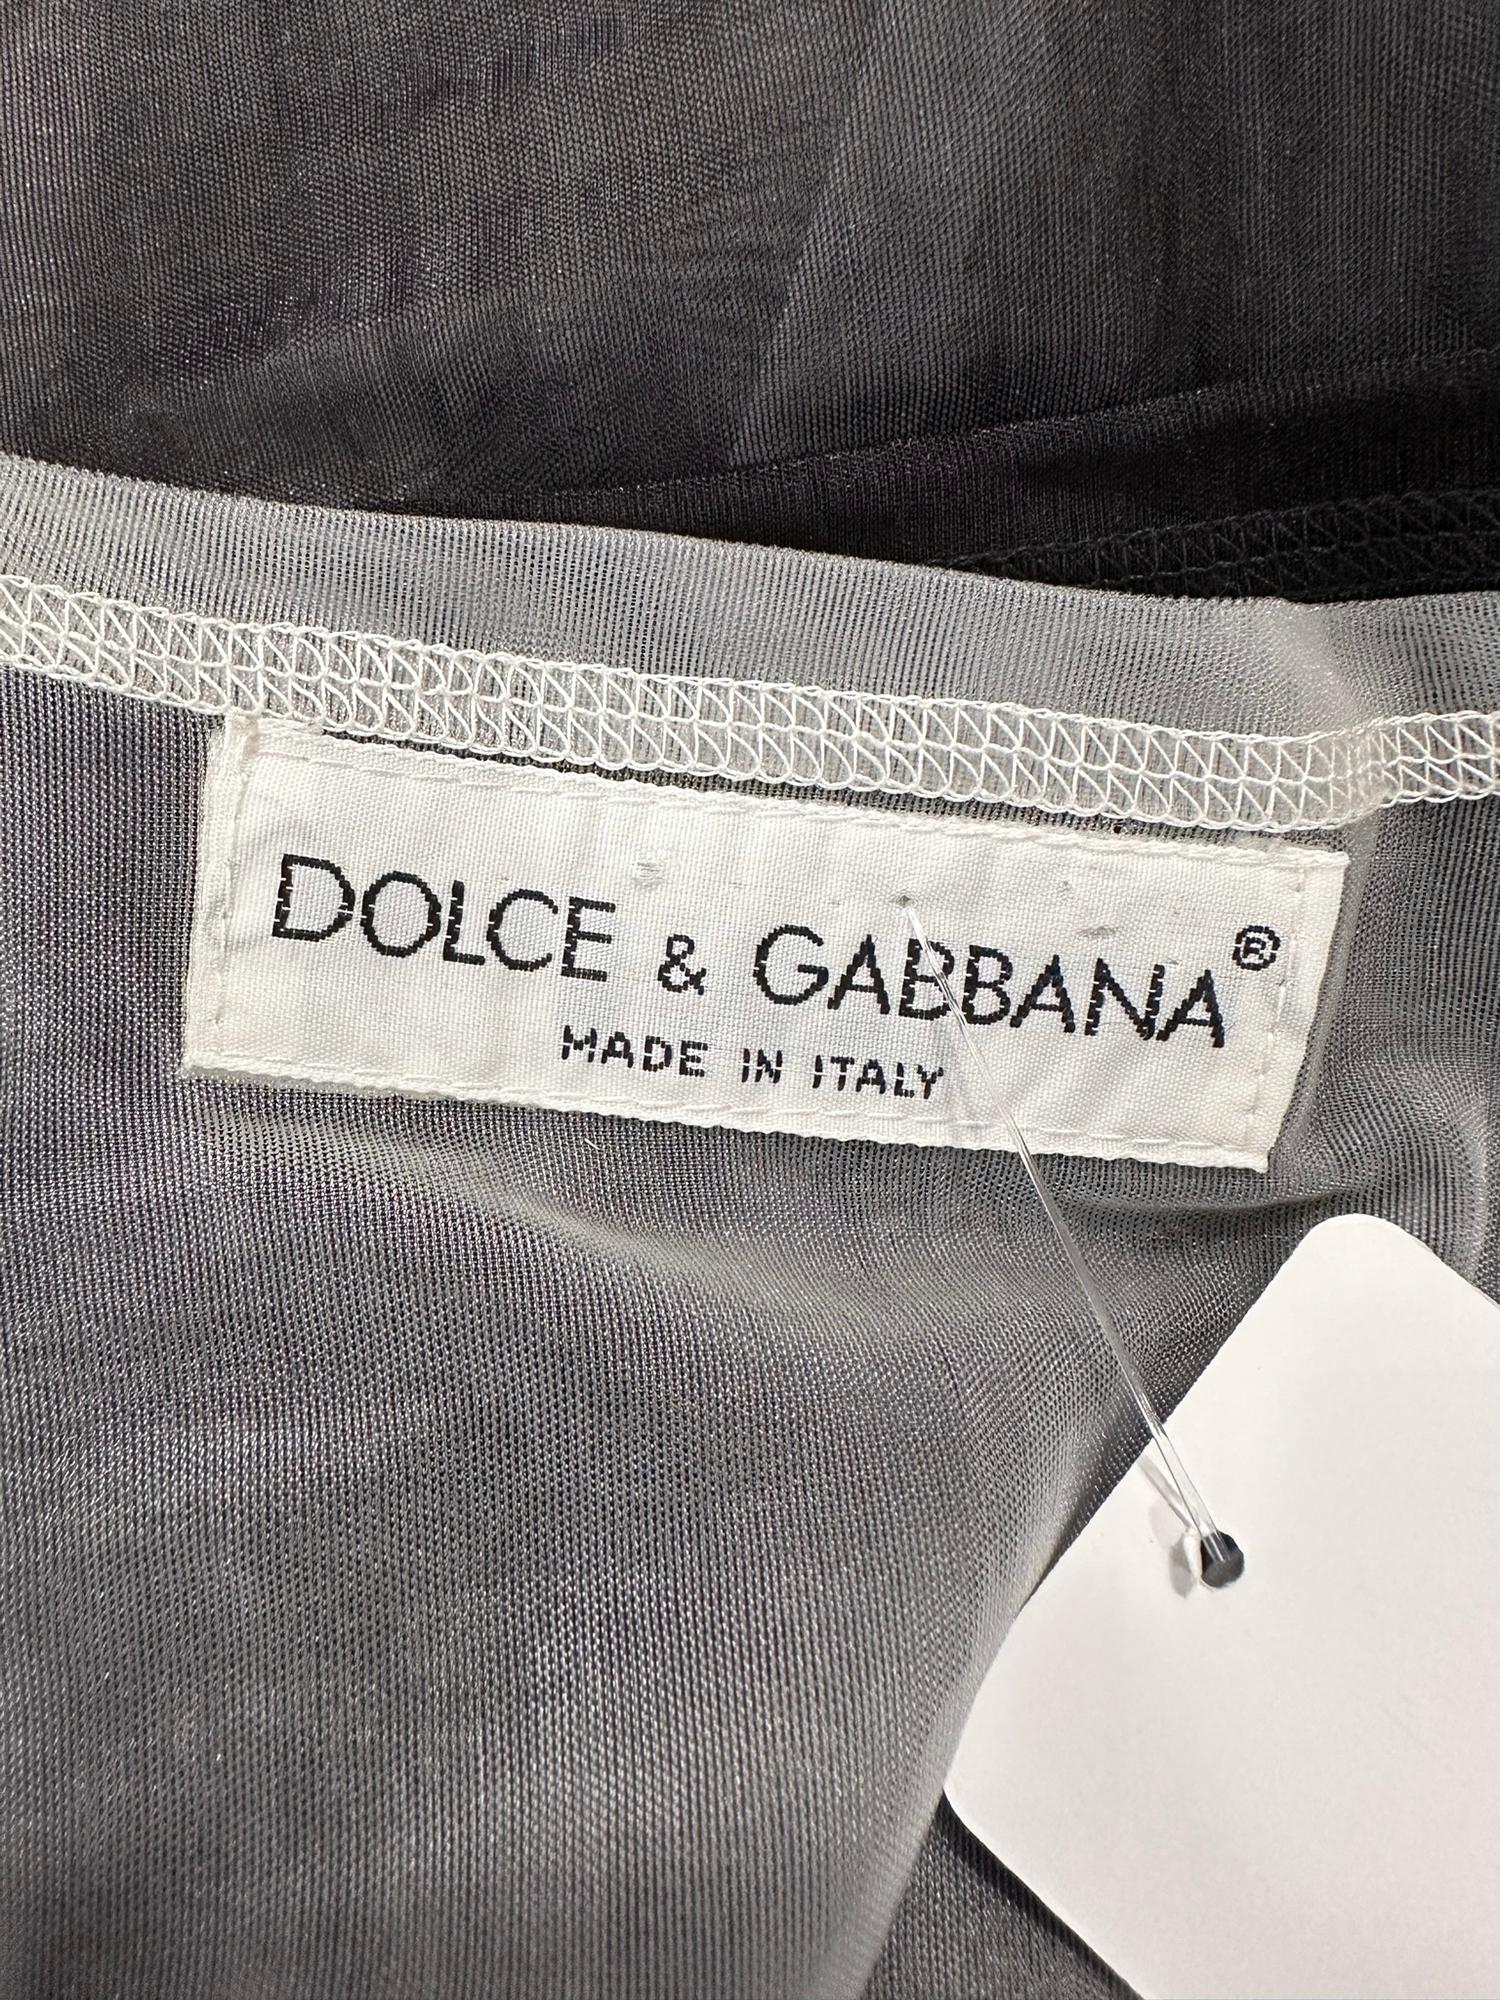 Dolce & Gabbana Sheer Black & White Nylon Athleisure Over size Top & Maxi Skirt  For Sale 11